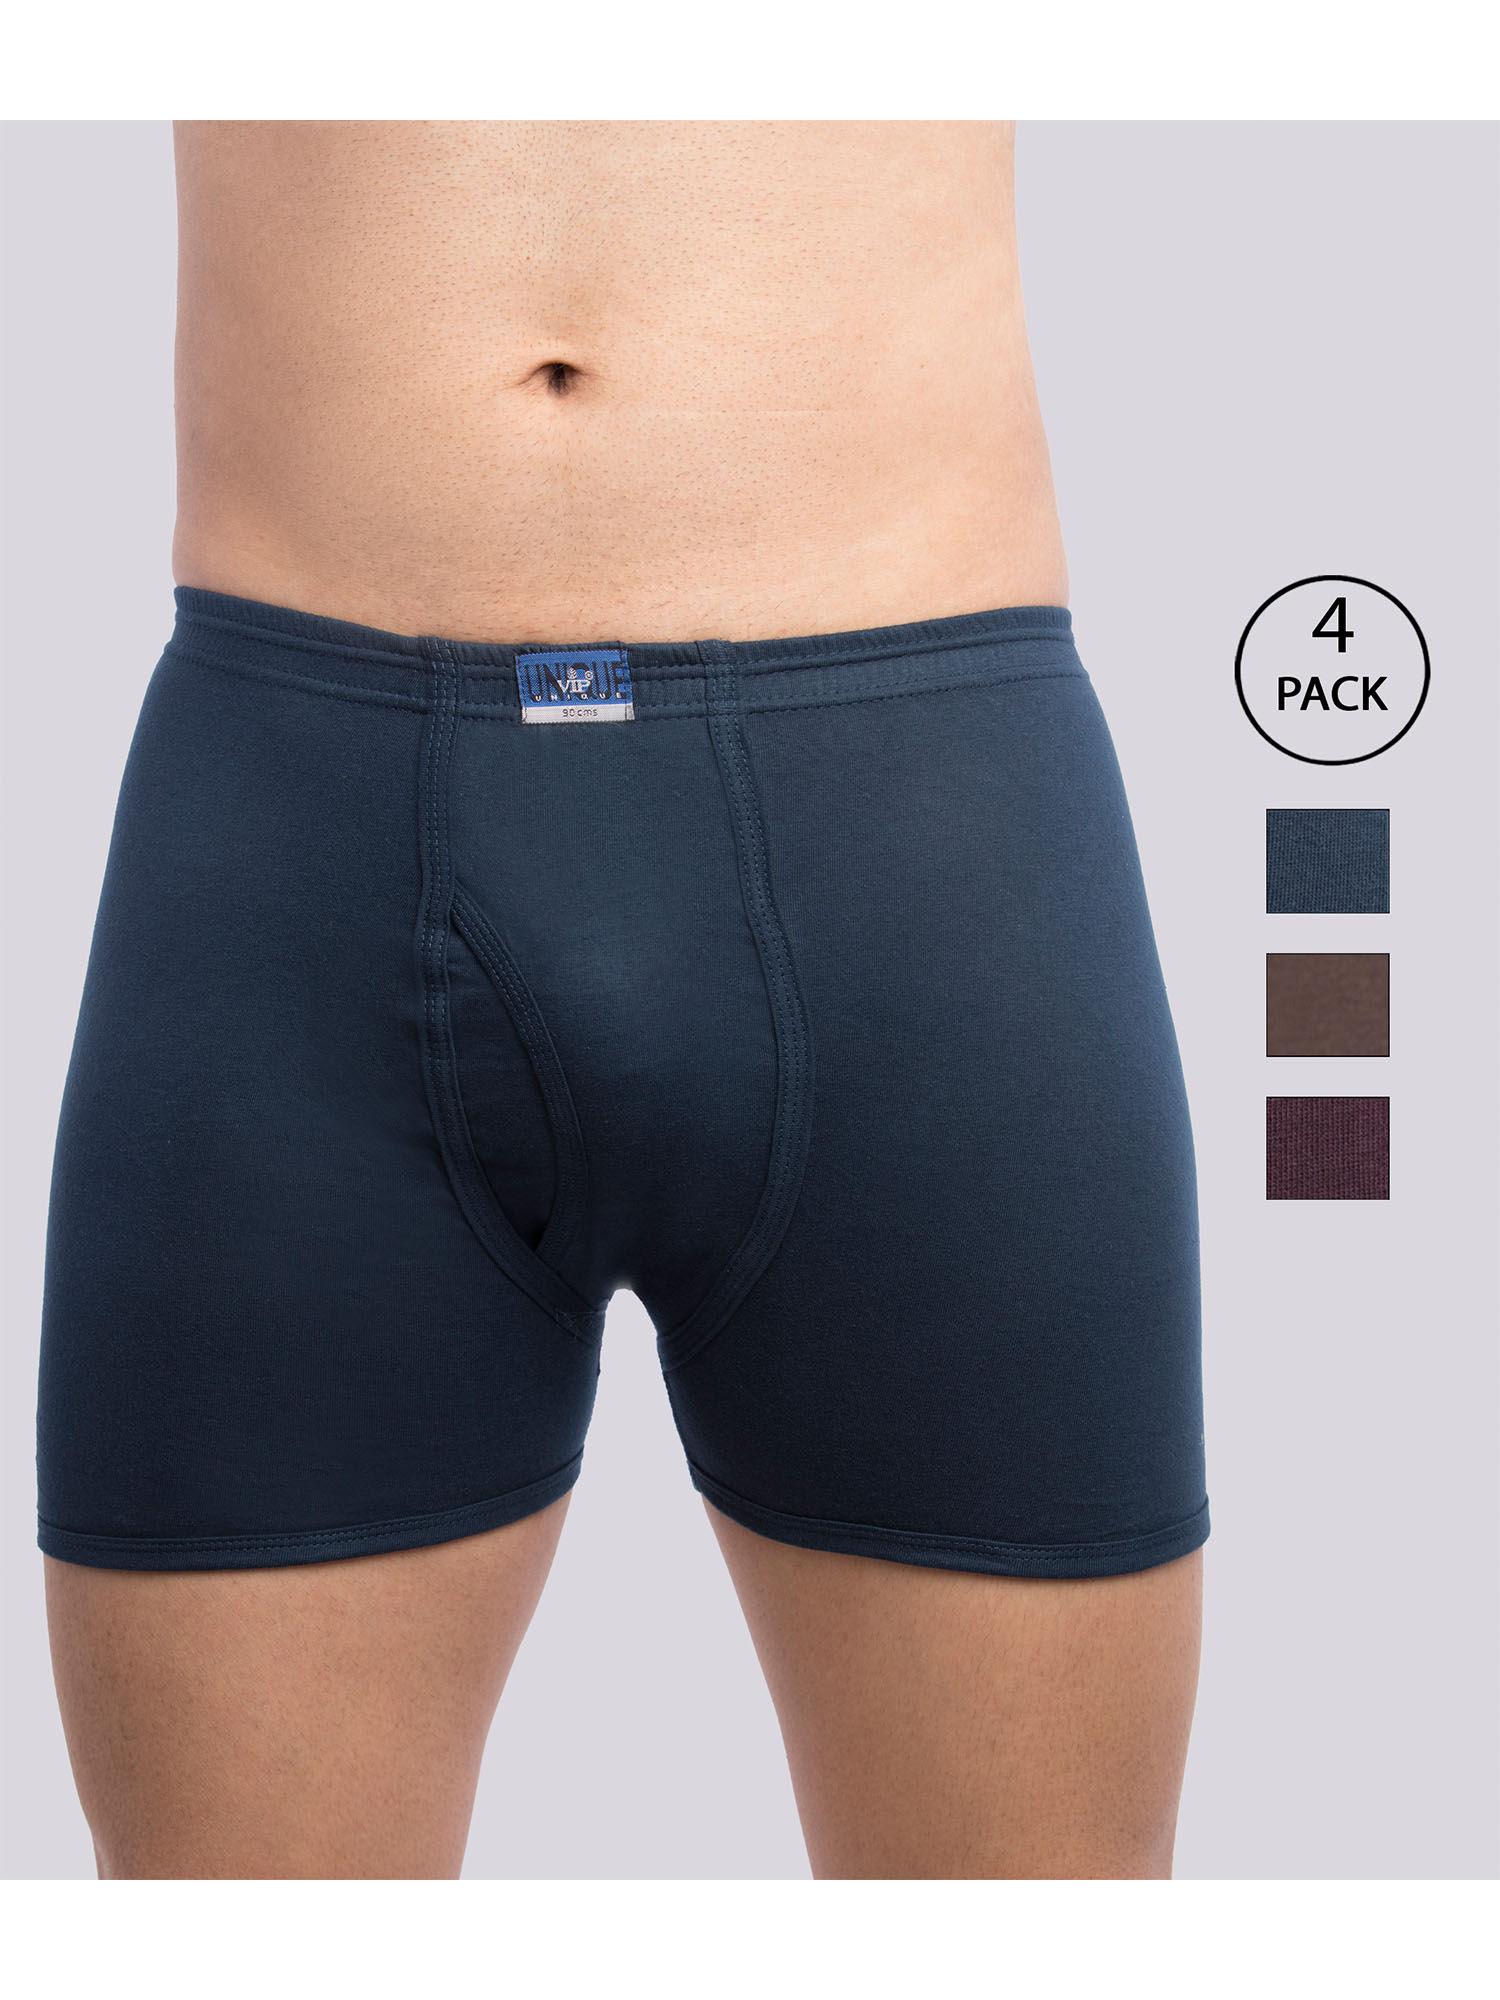 unique men's snug fit cotton trunks in assorted colors (pack of 4)